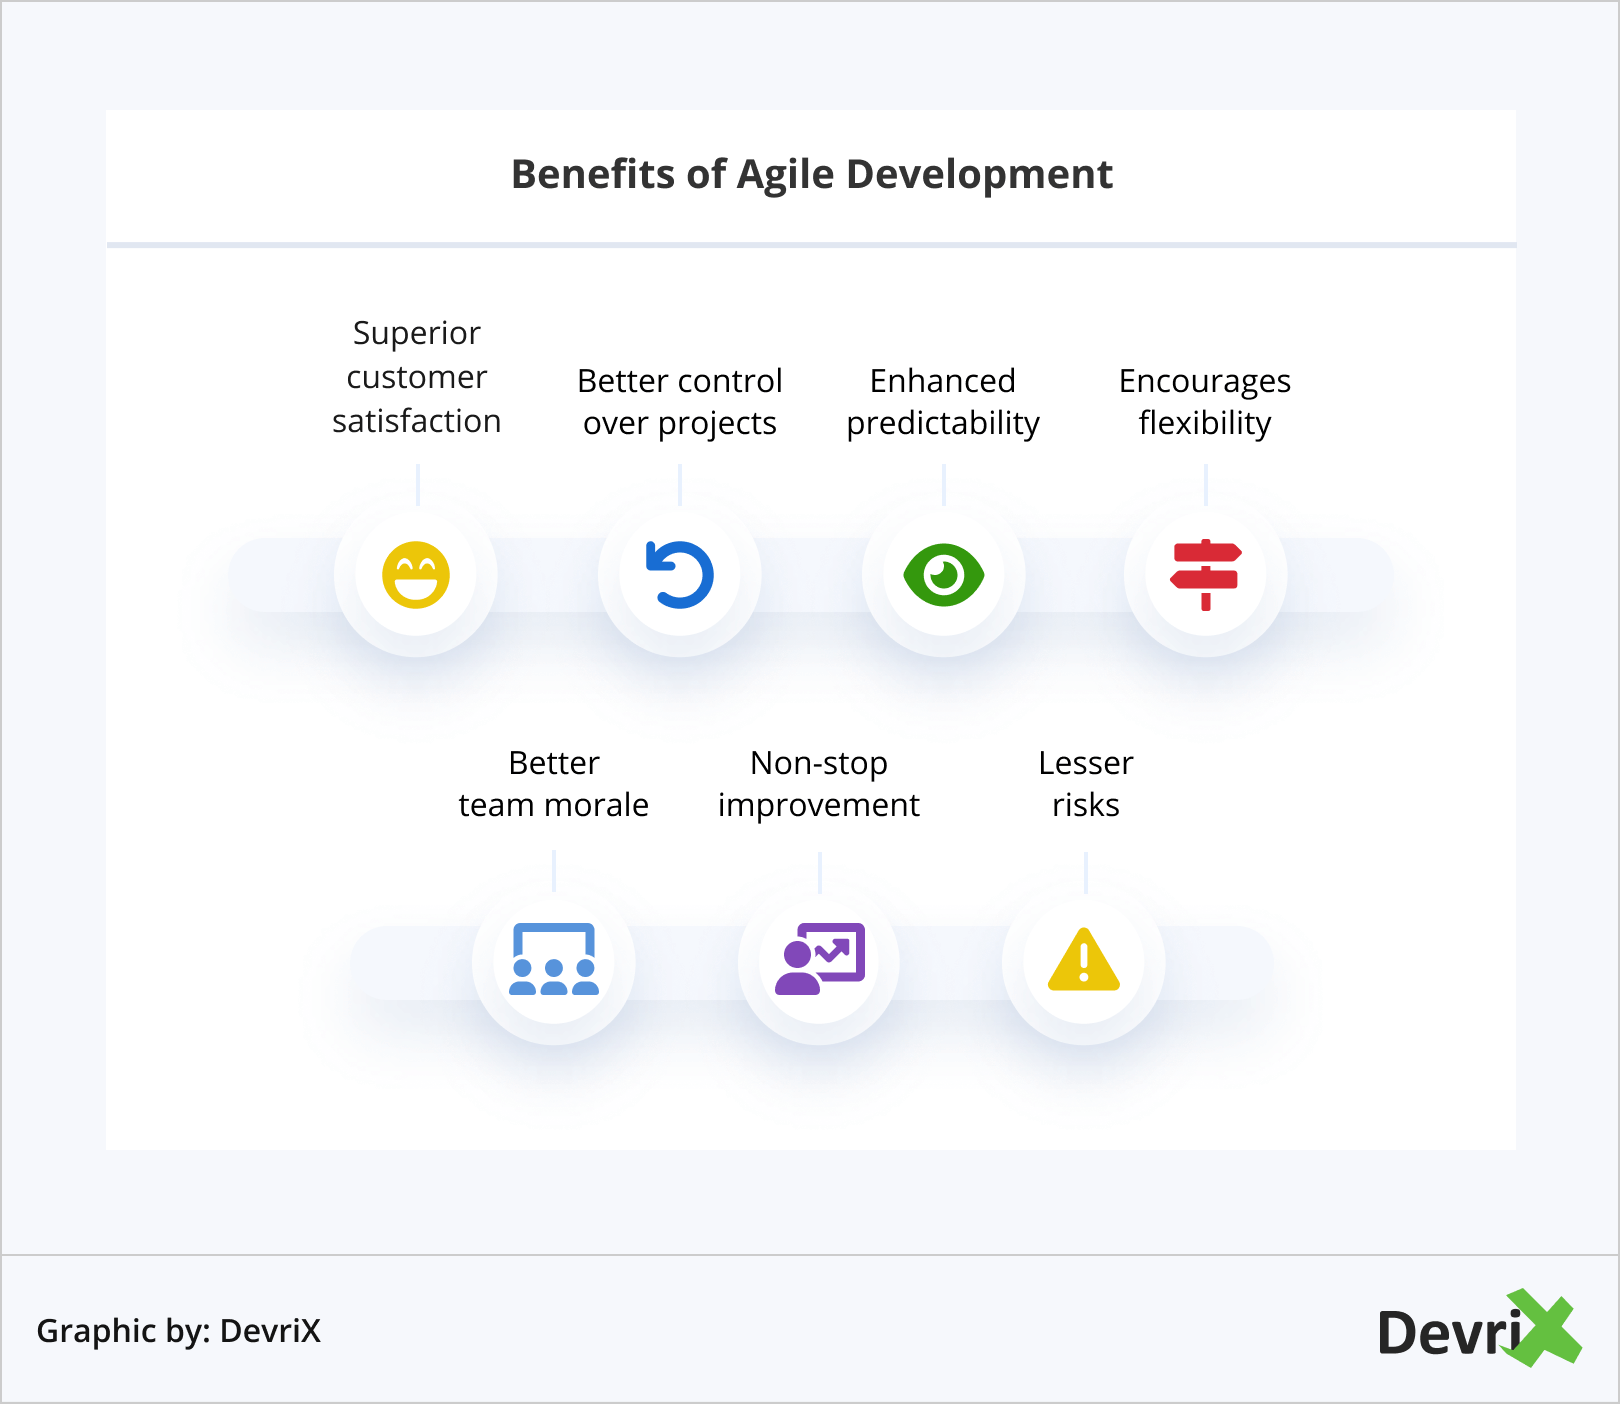 Benefits of Agile Development